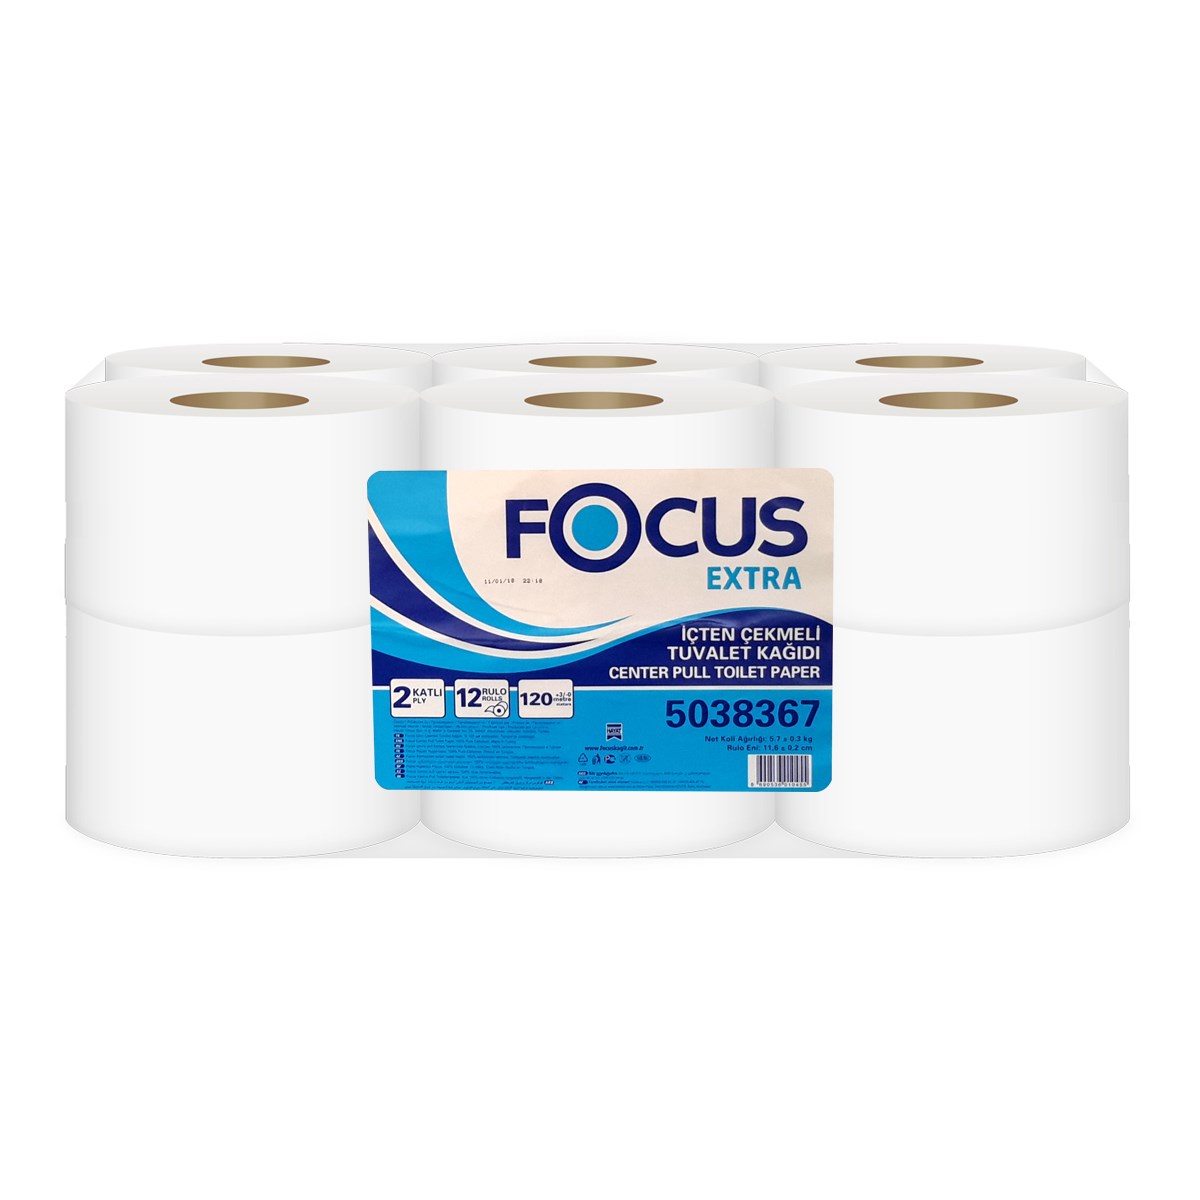 Focus Extra İçten Çekmeli Tuvalet Kağıdı 120 Metre (12 Adet)